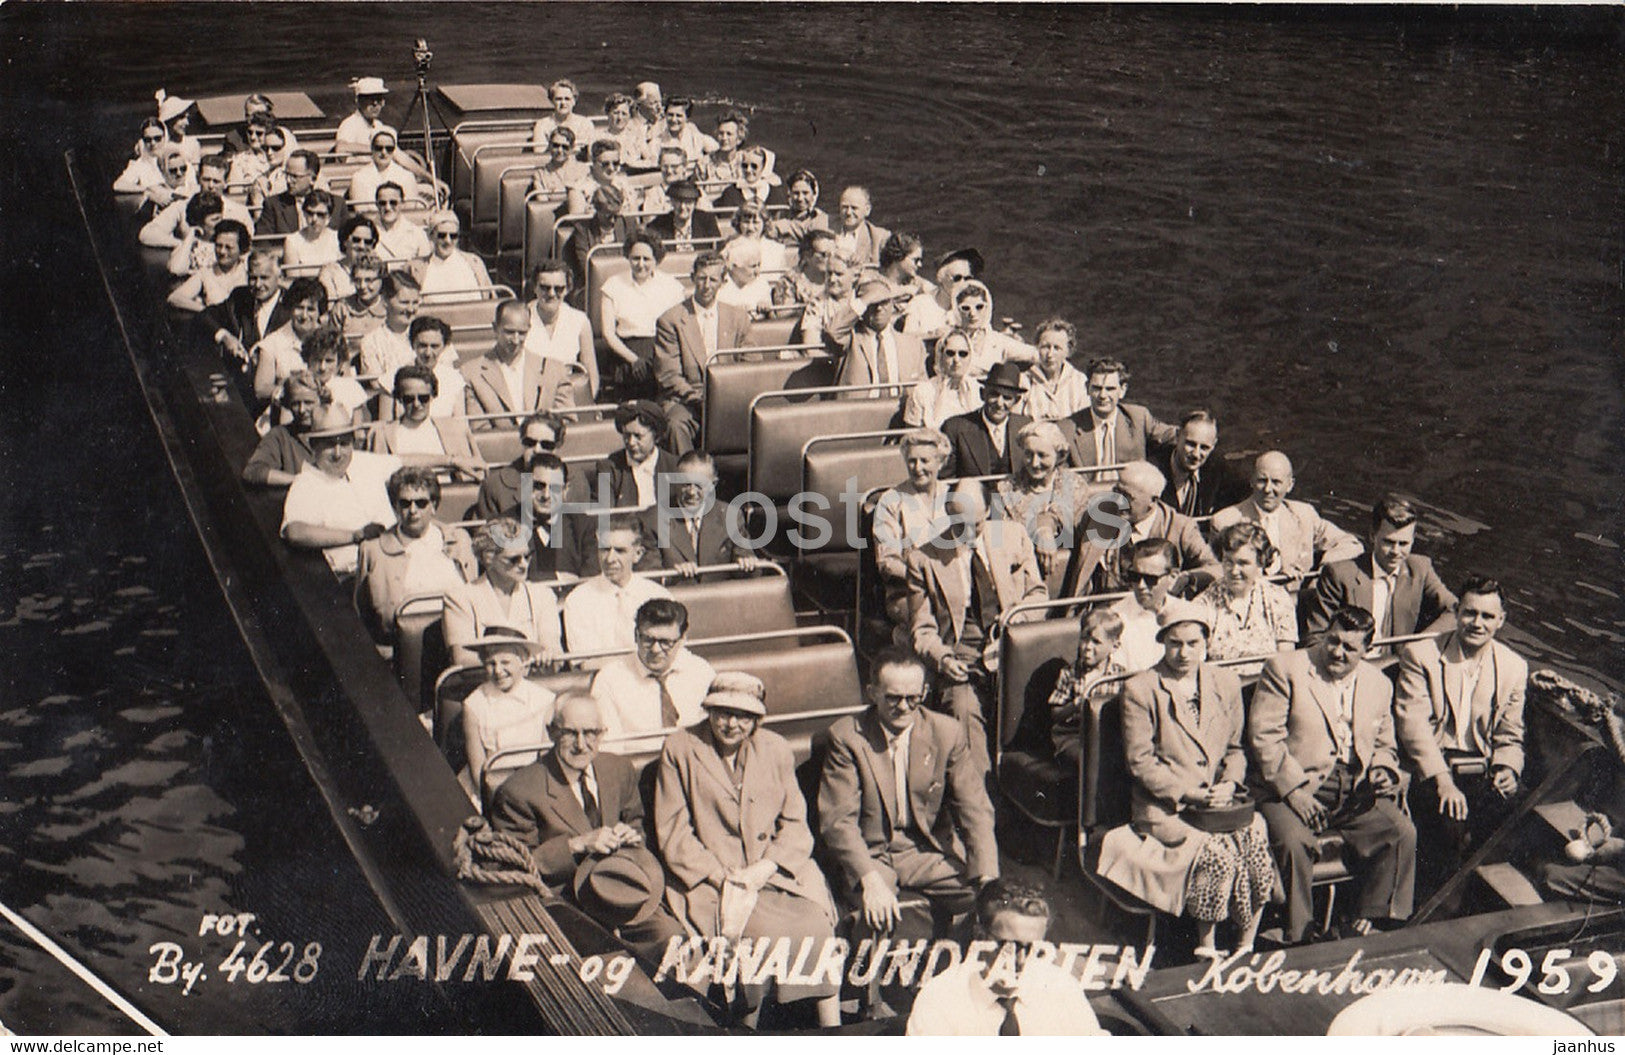 Copenhagen - Havne og Kanalrundfarten - Garden and the Canal Tour - boat - 4628 - old postcard - Denmark - unused - JH Postcards